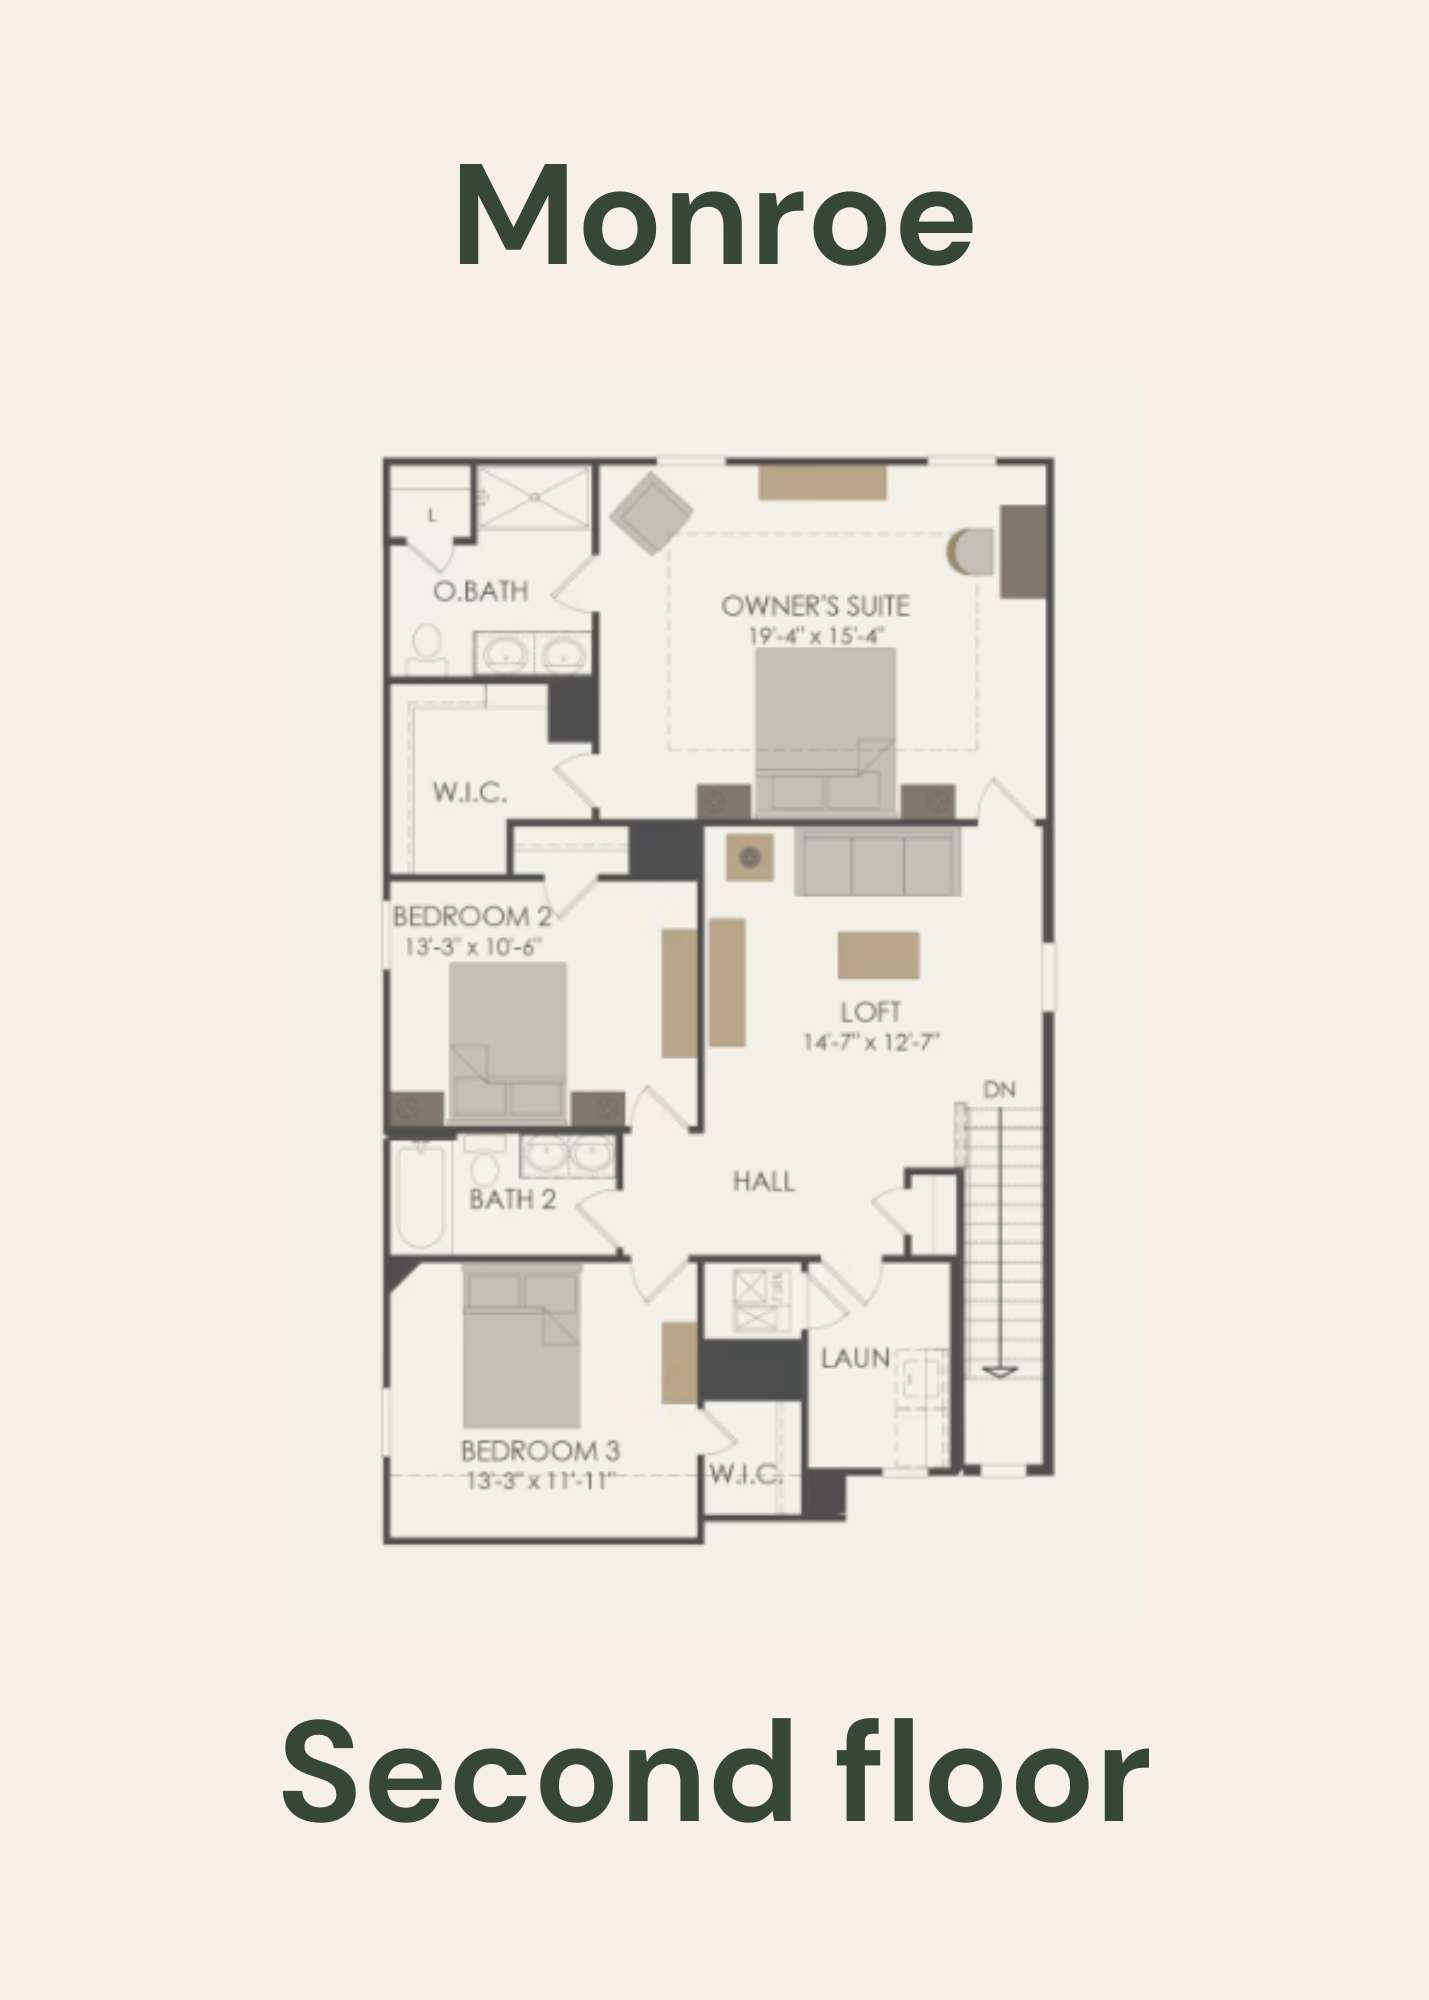 Monroe Second Floor - Floor Plan by Centex Homes